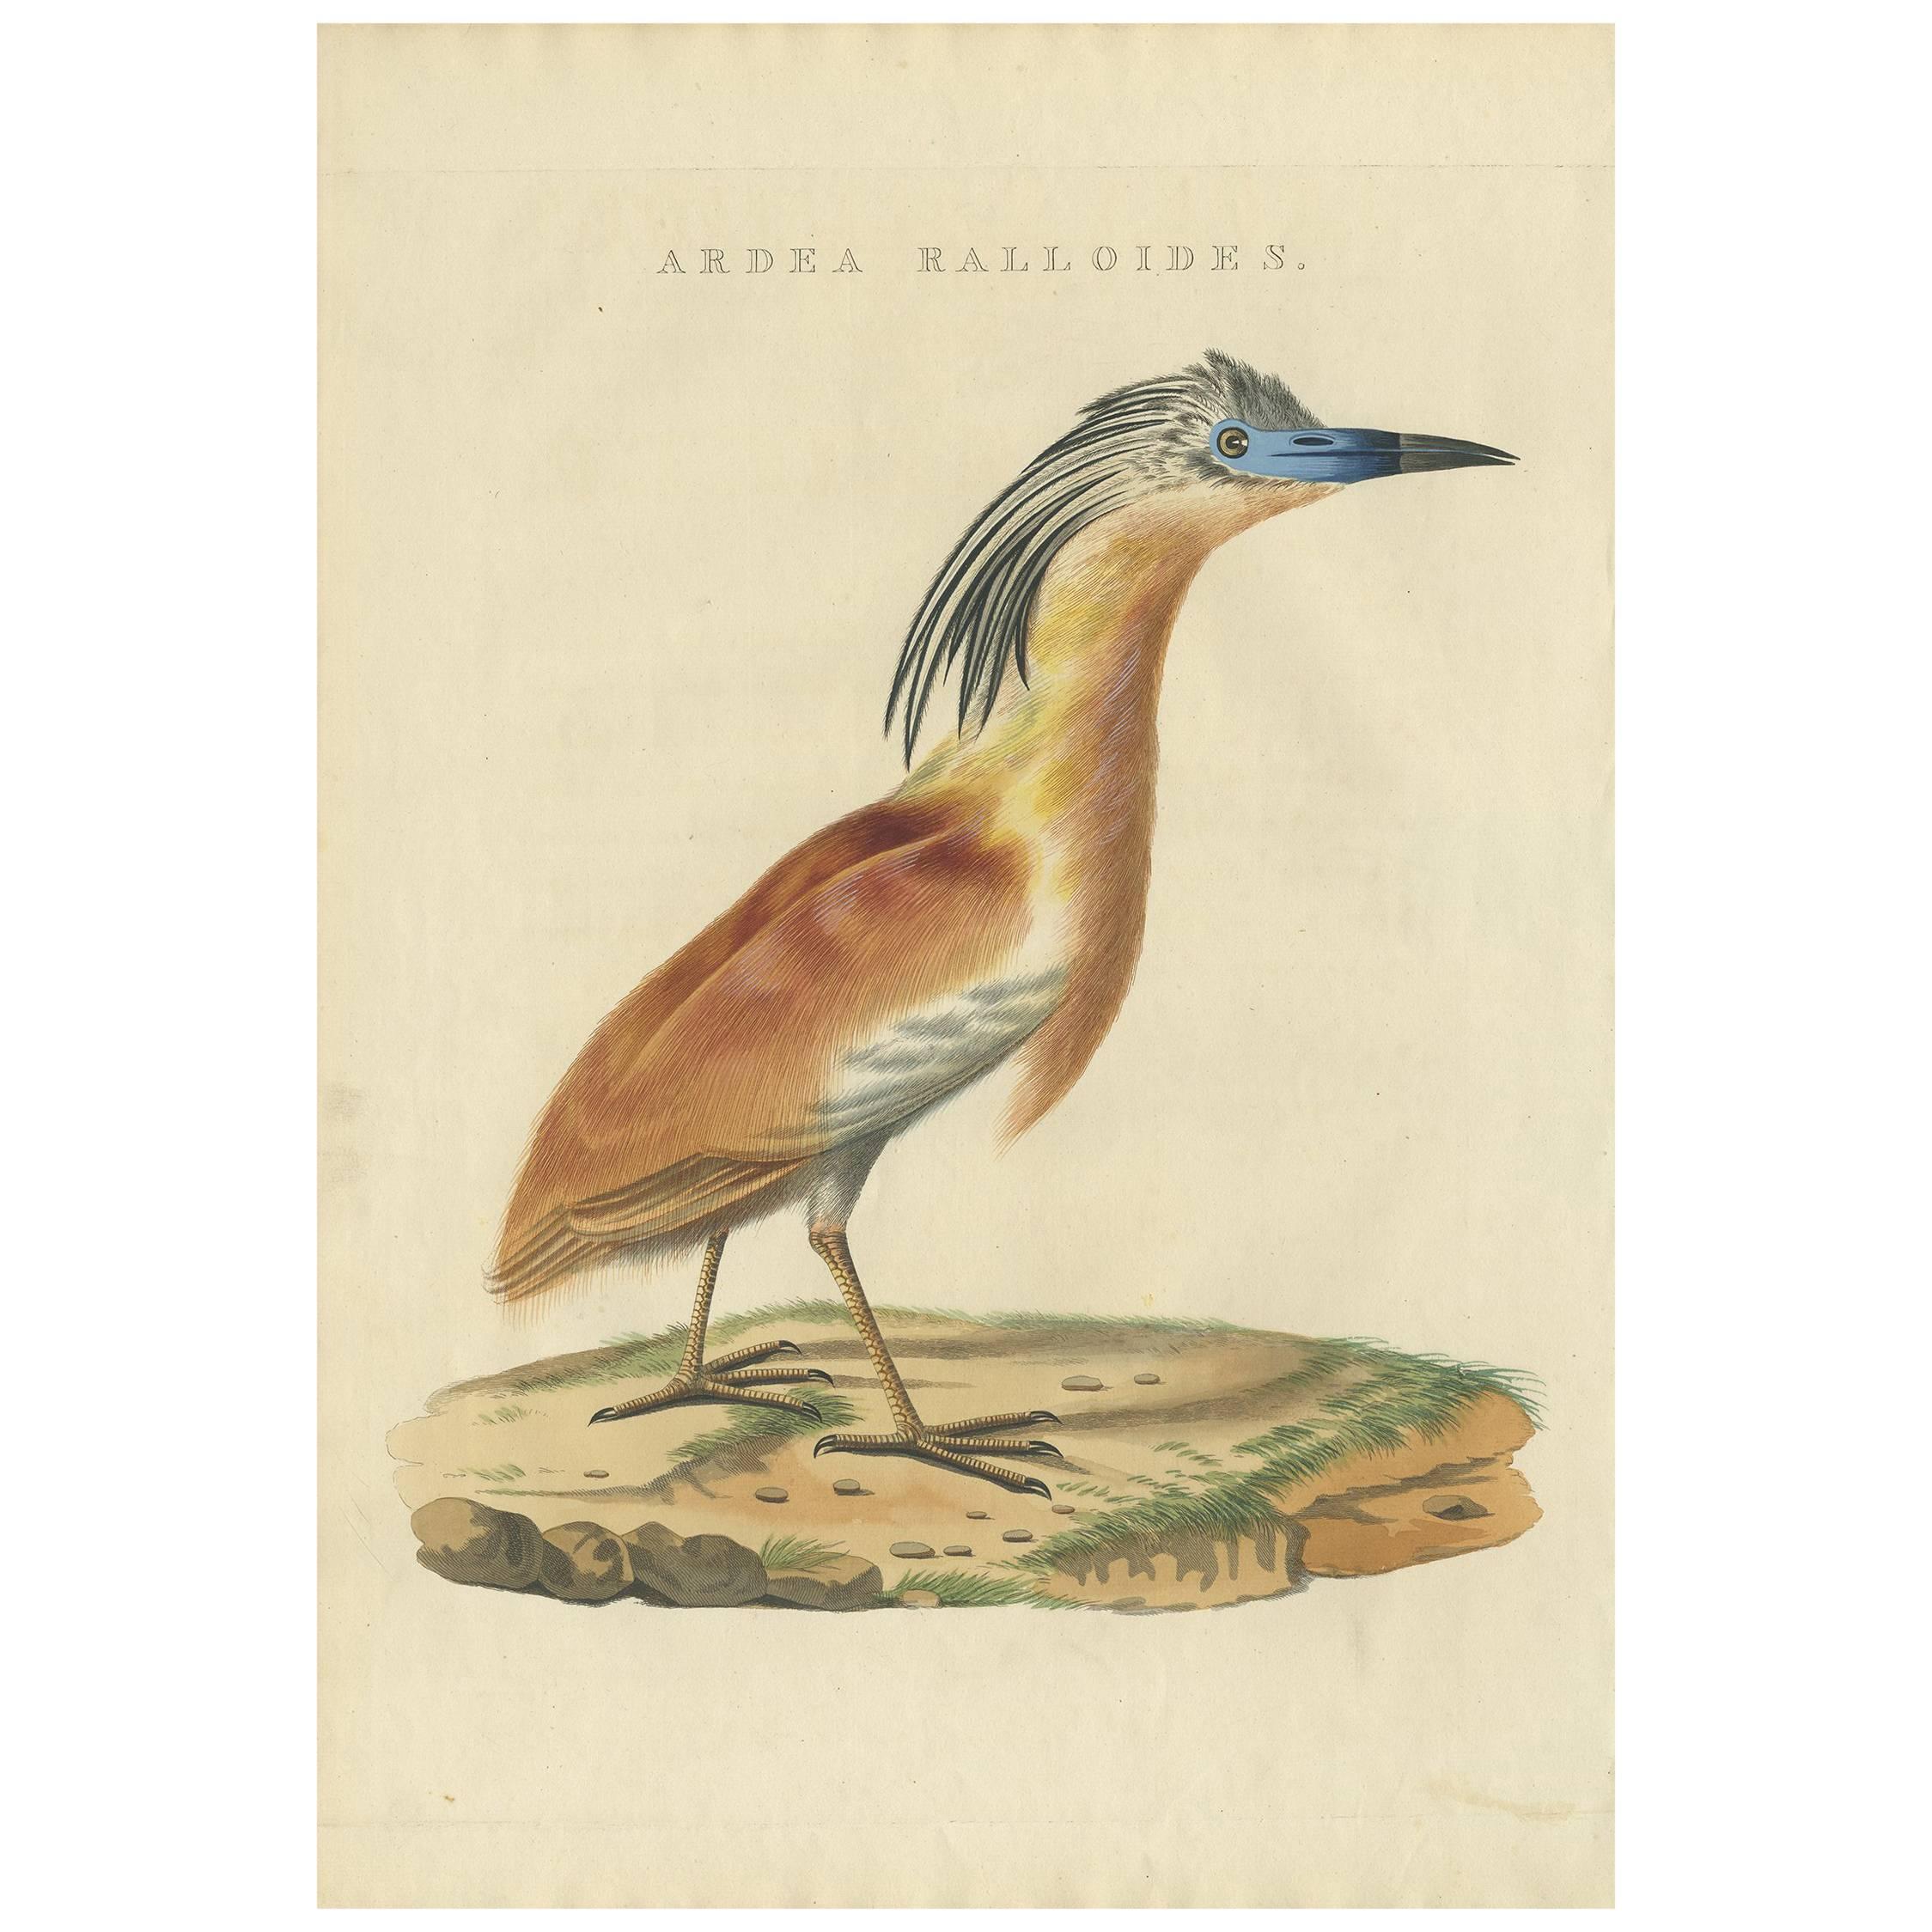 Antique Bird Print of the Squacco Heron by Sepp & Nozeman, 1829